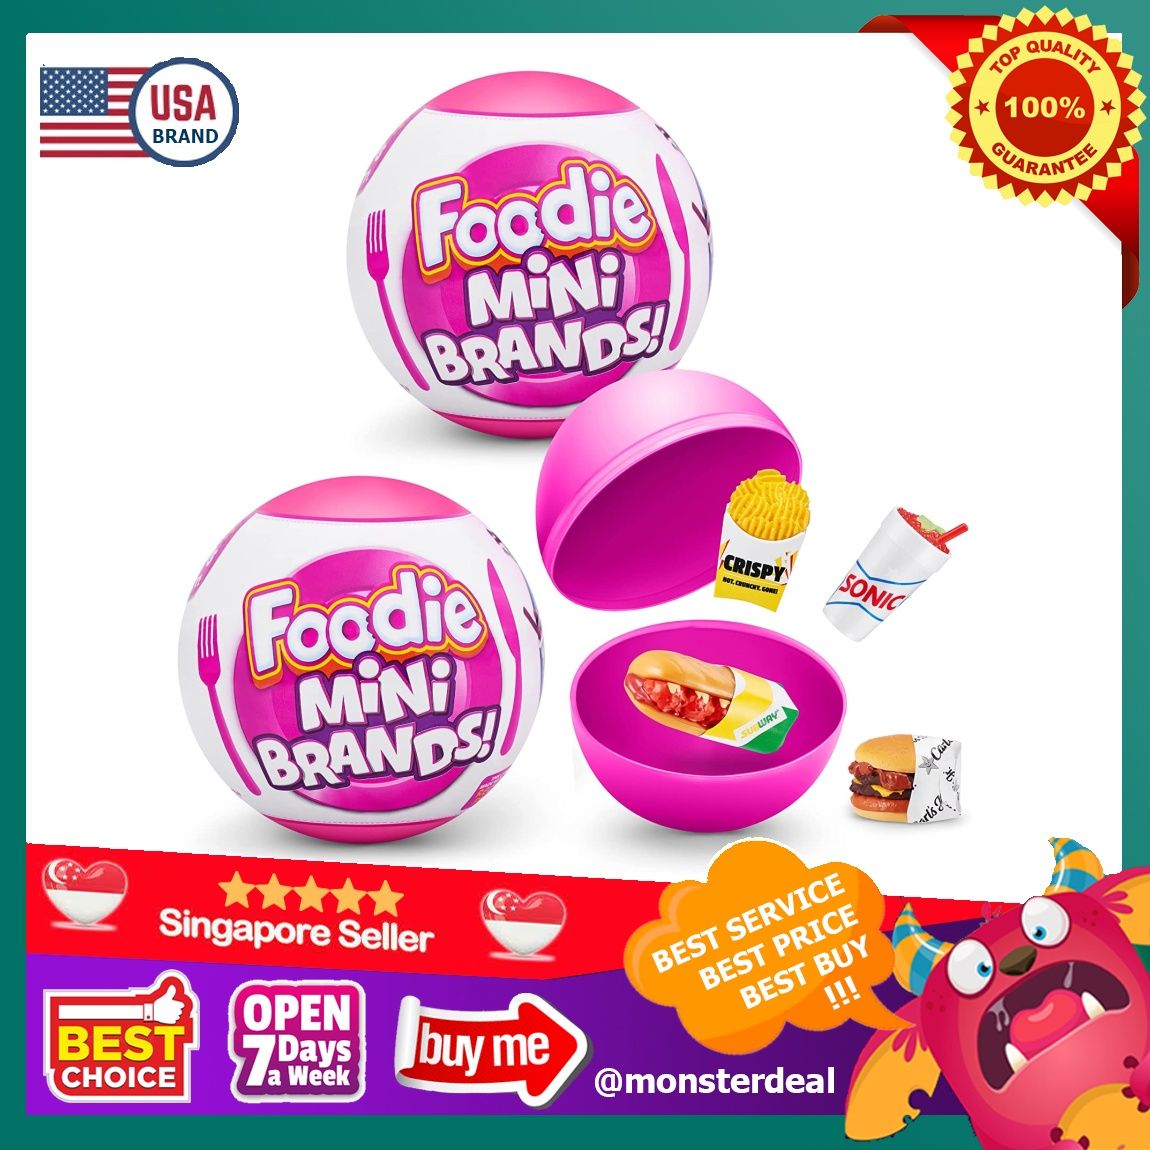 Foodie Mini Brands Series 2 Capsule Real Miniature Brands Assortment by ZURU